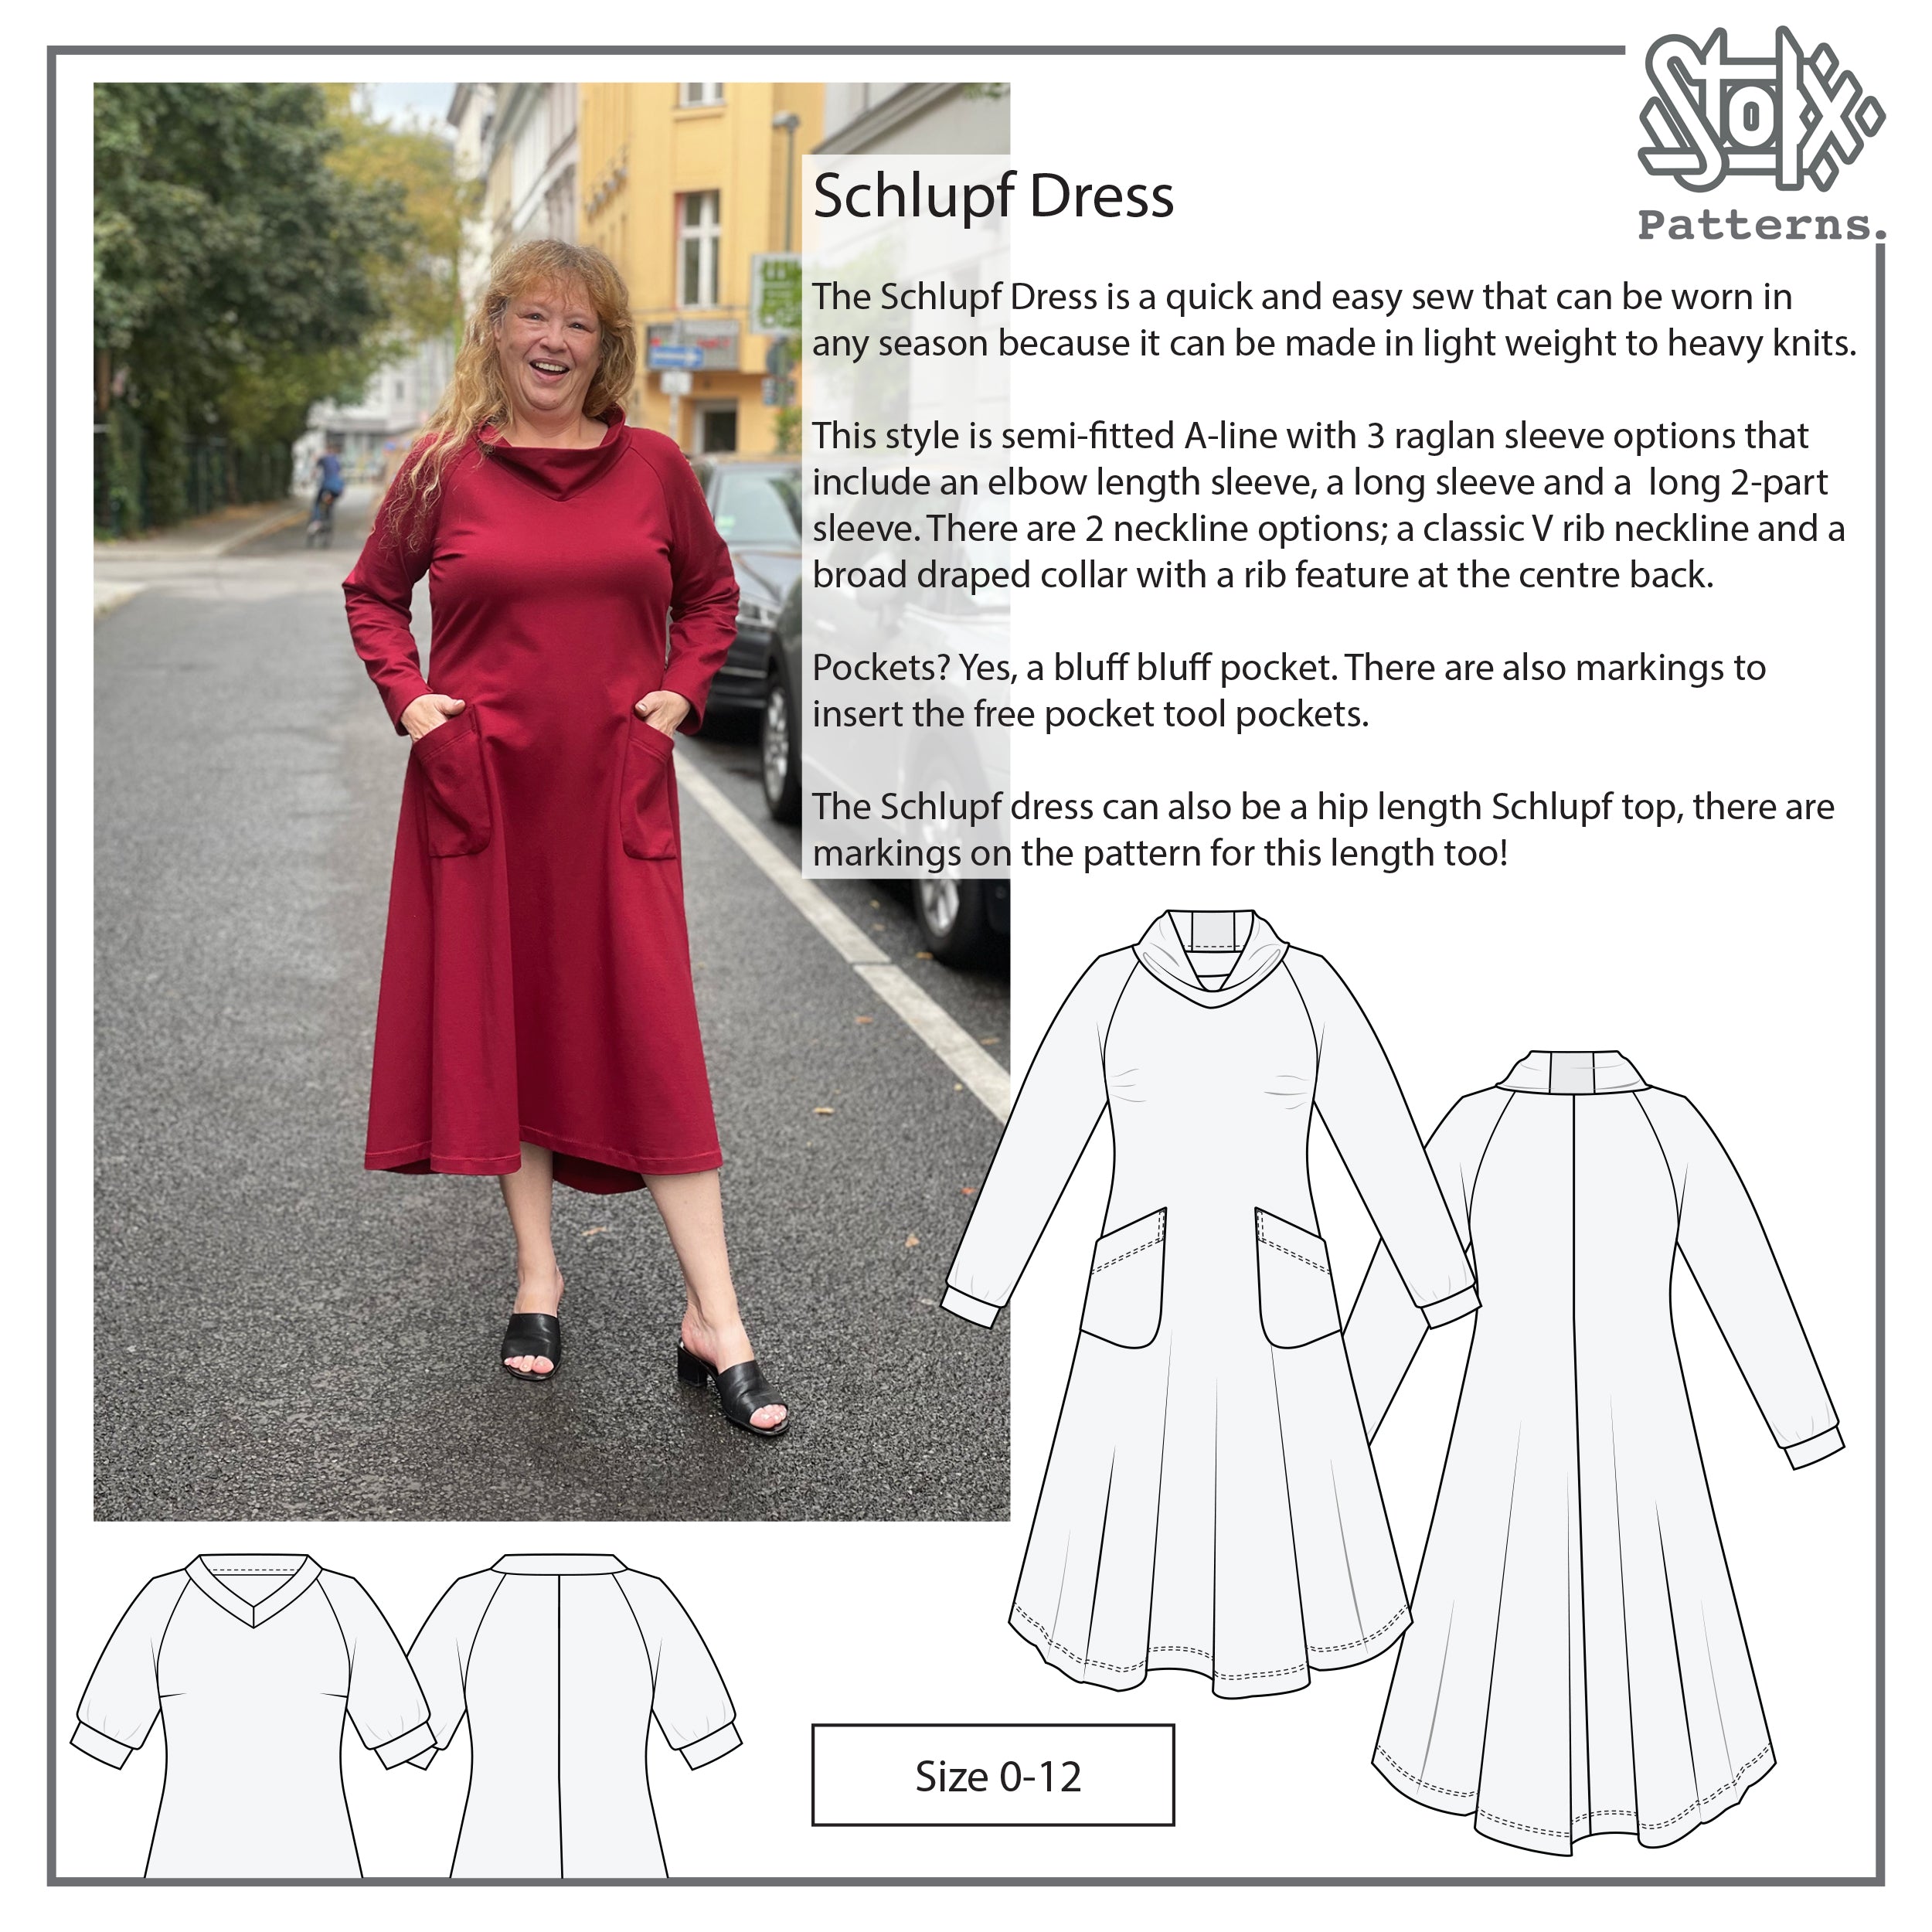 Schlupf Dress – Stokx Patterns